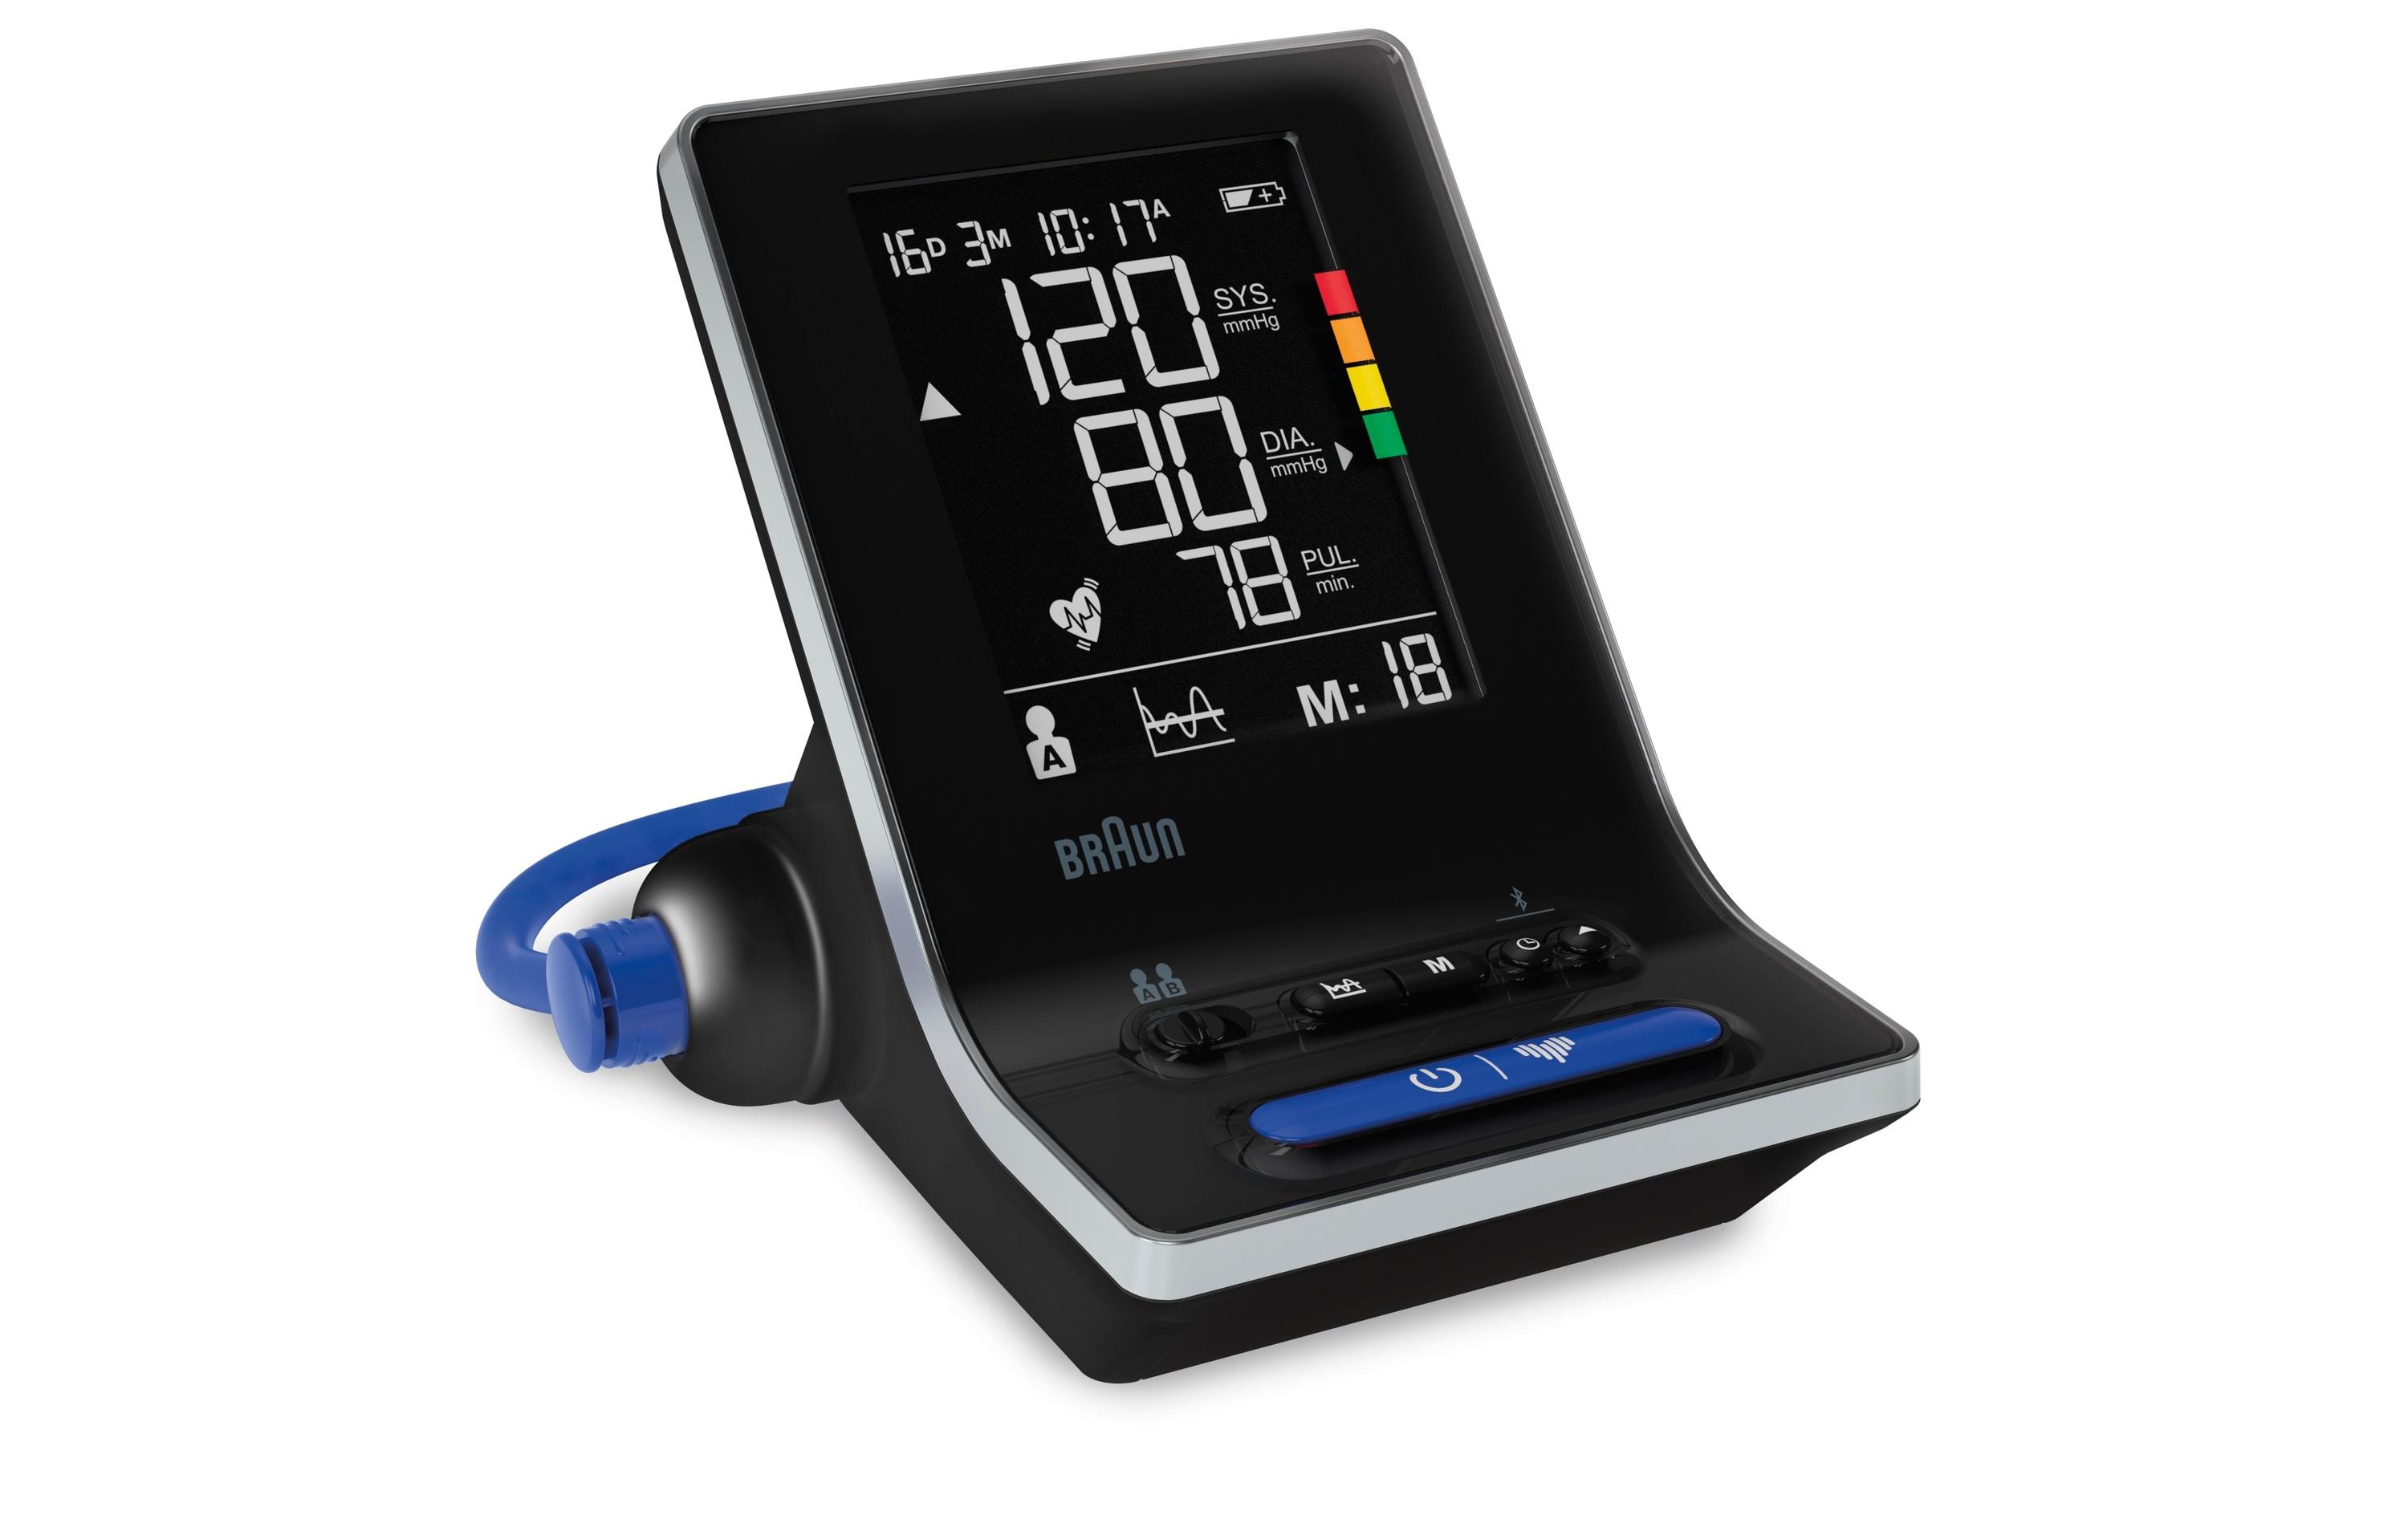 Braun Blutdruckmessgerät ExactFit 5 Connect BUA 6350